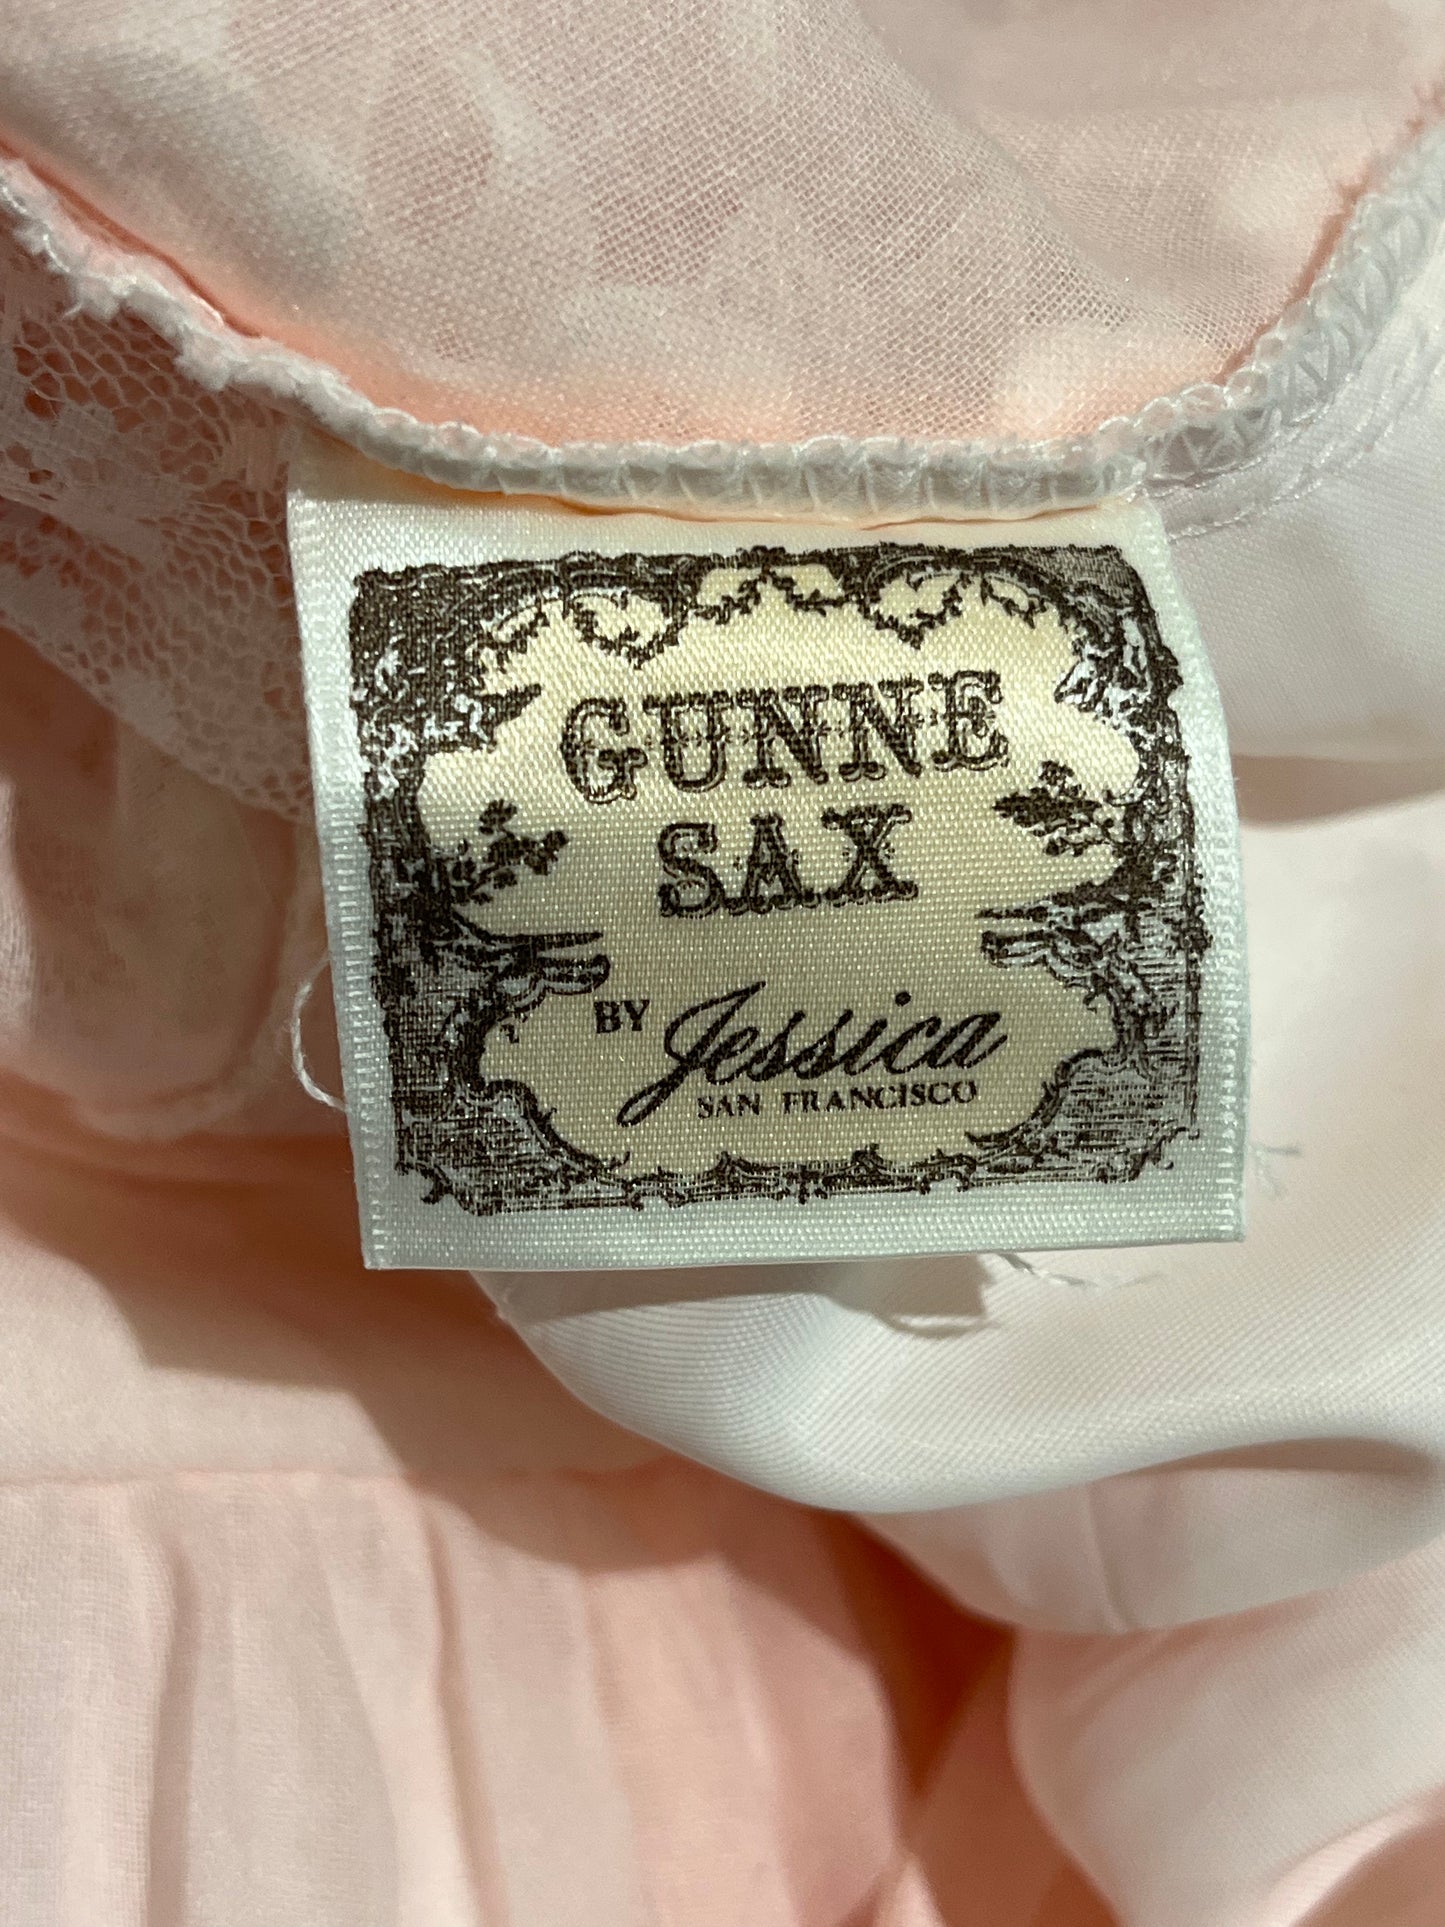 70s 'Gunne Sax' Pink Long Sleeve Peasant Dress / Small - Medium